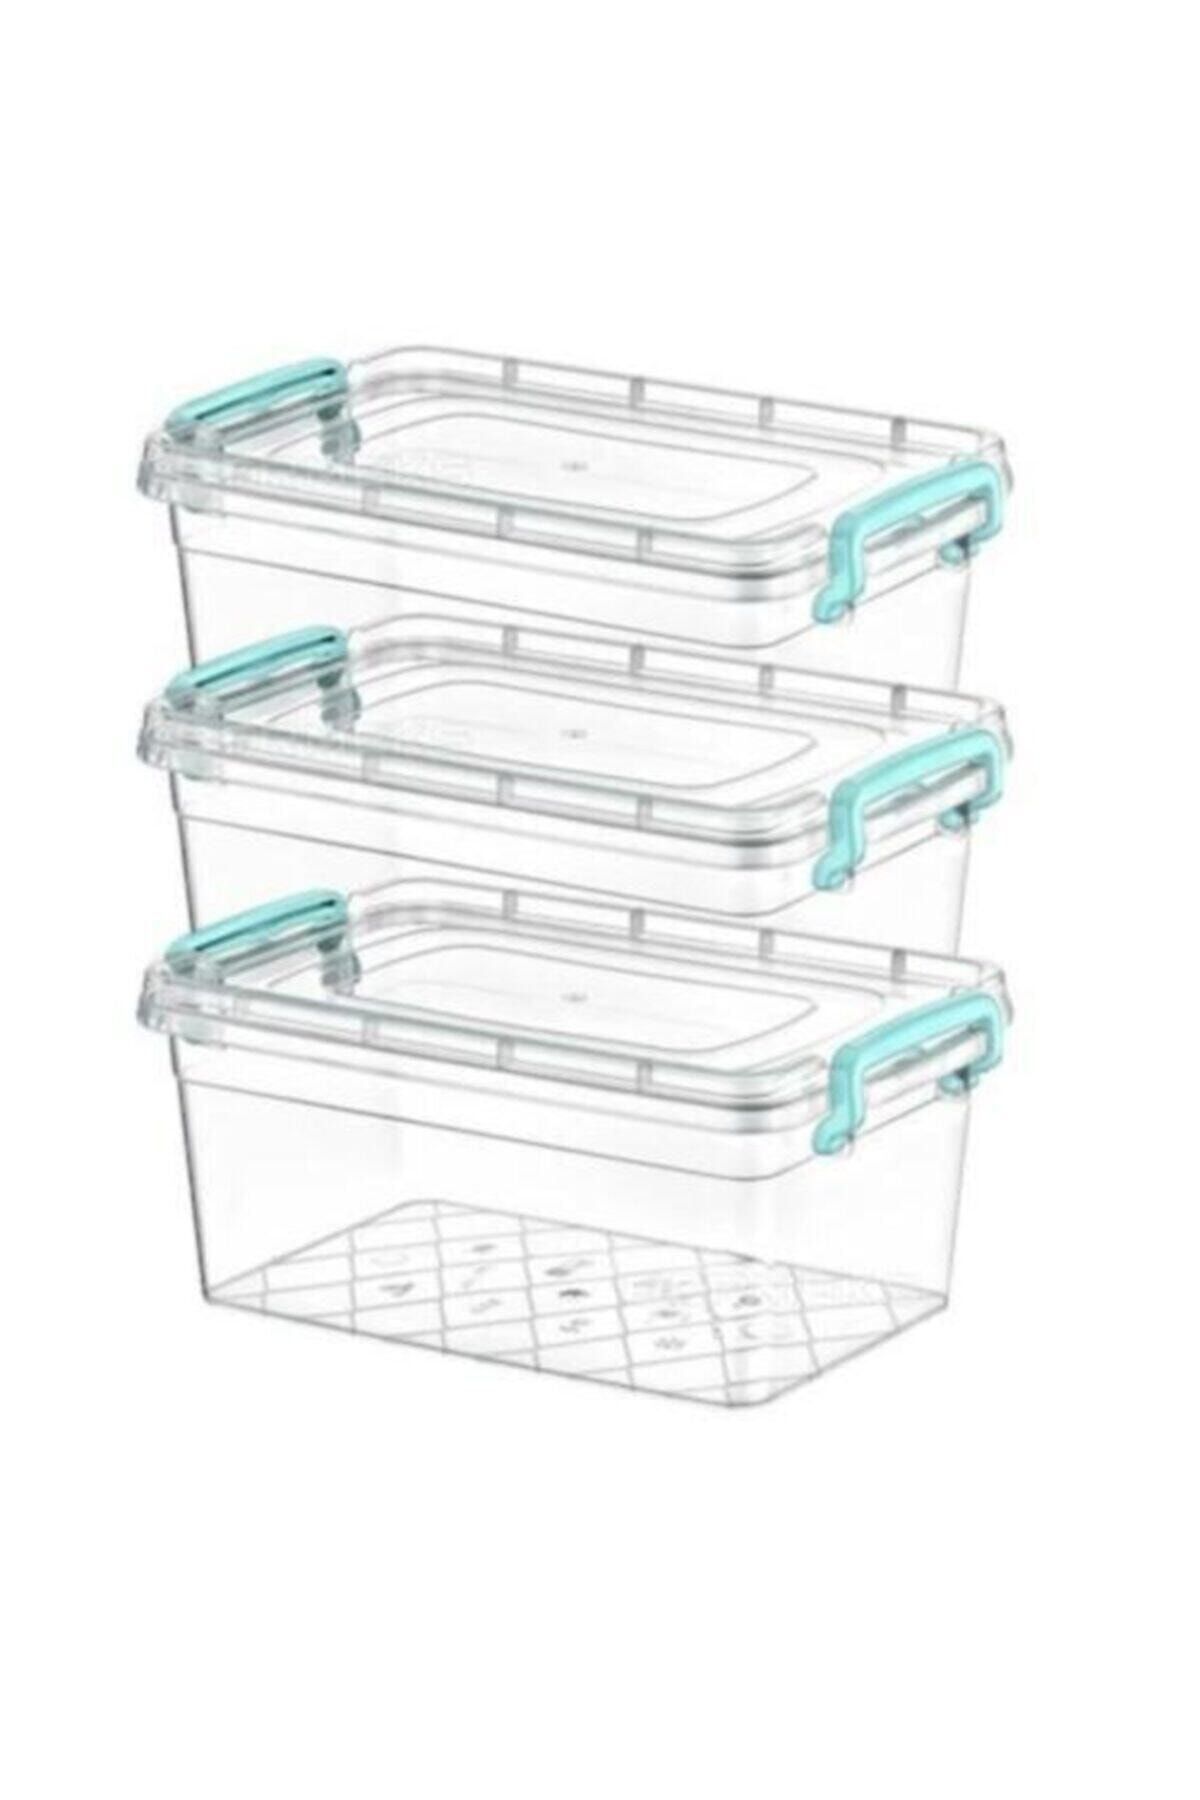 Kivi Home Plastik Kutu Kapaklı Taşıma Saplı Saklama Kabı 3.5 Litre 3lü Set